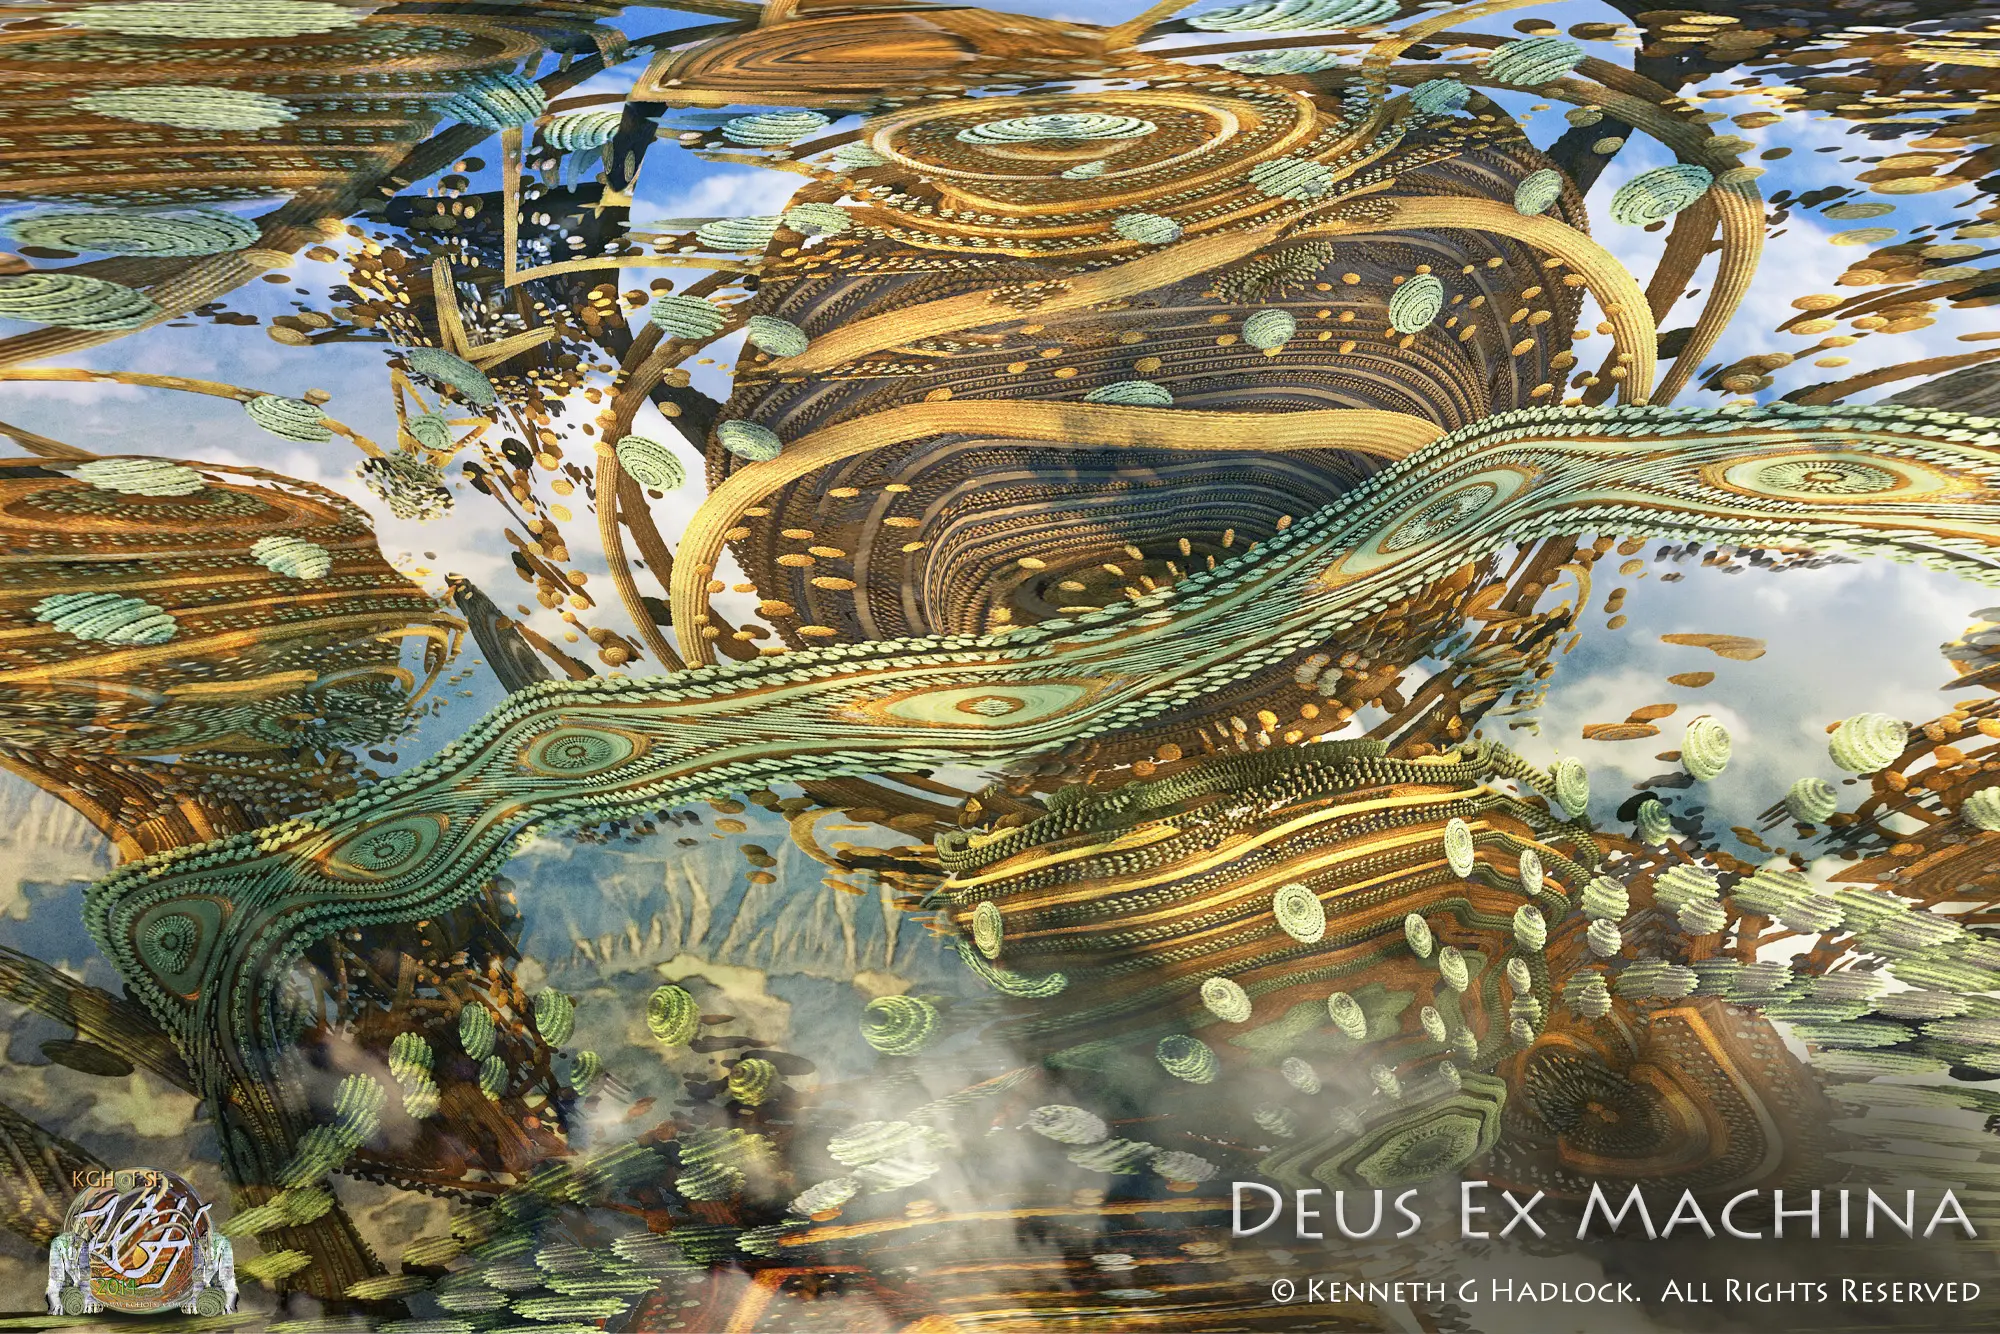 Digital Artwork - "Deus Ex Machina"